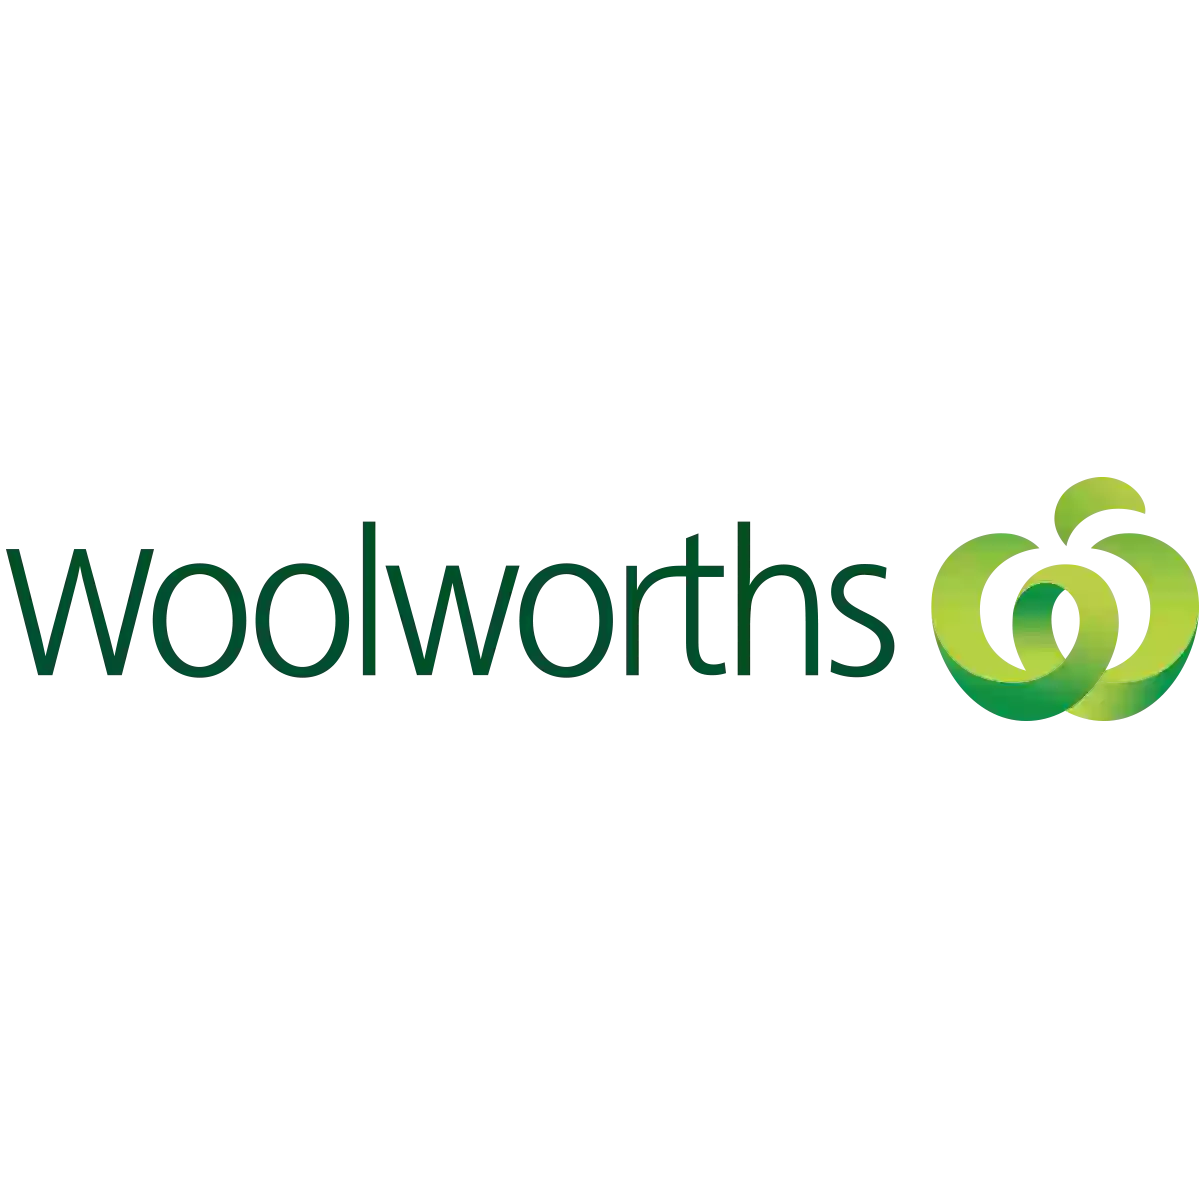 Woolworths Watervale